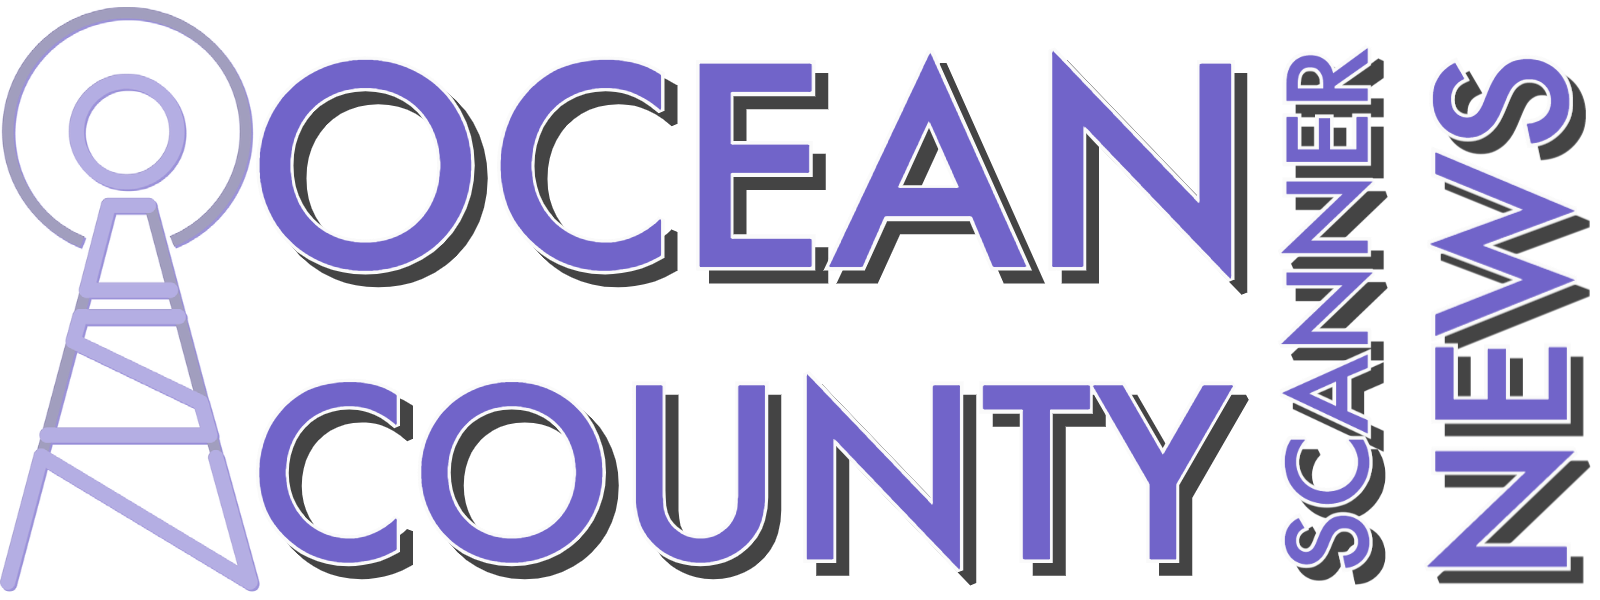 Ocean County Scanner News